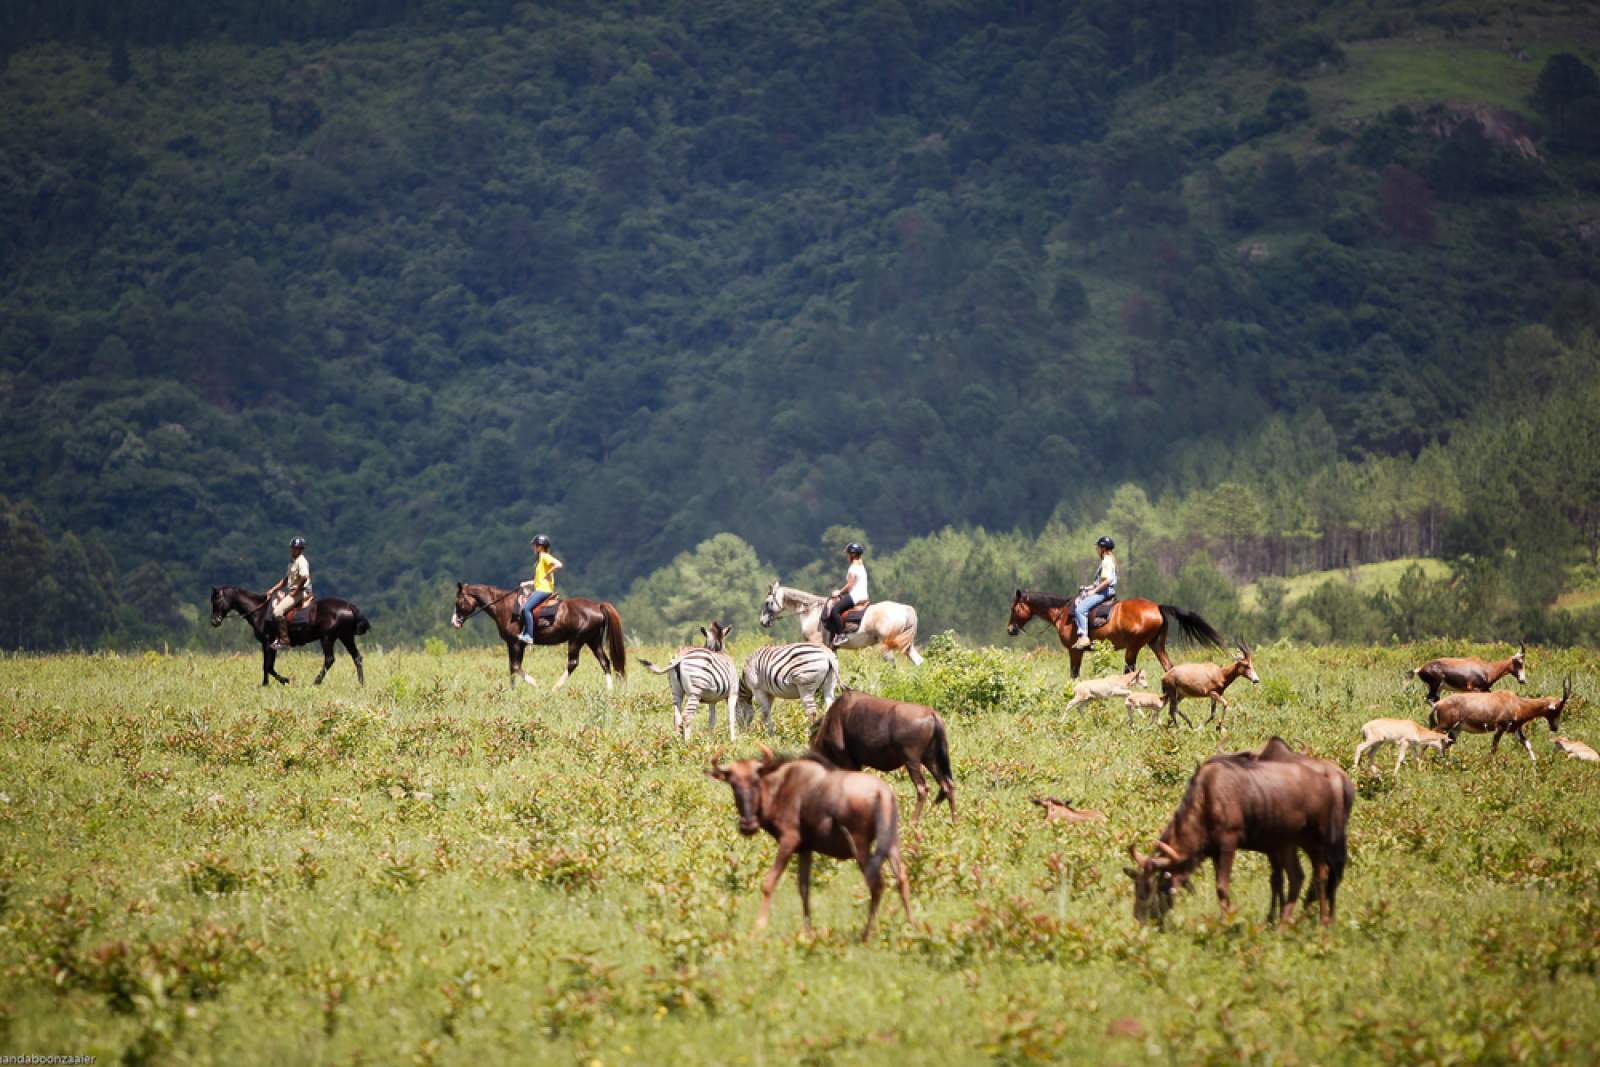 Horse safari with wildebeest, antelope and zebra